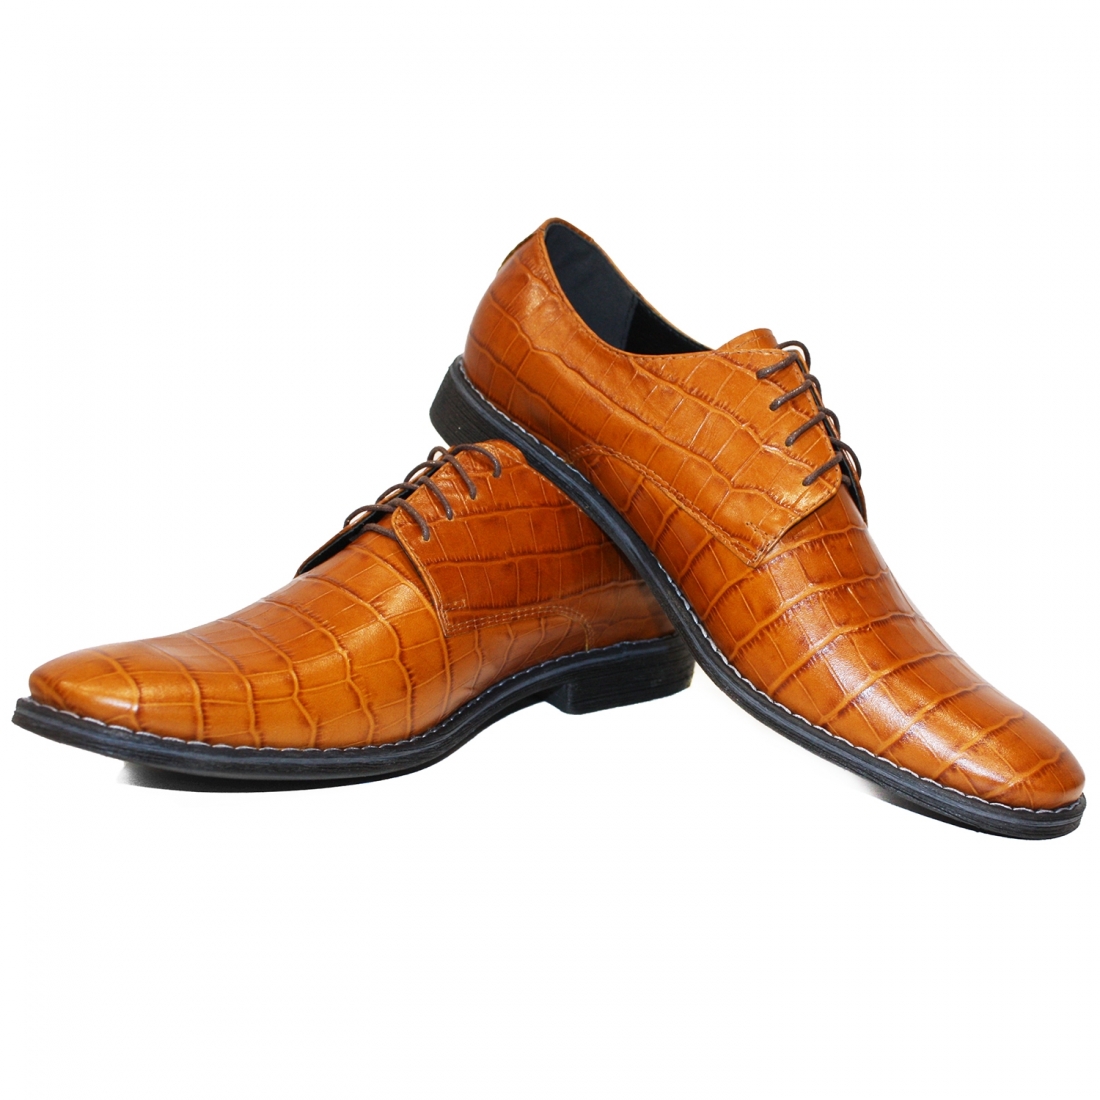 Modello Jutersho - Scarpe Classiche - Handmade Colorful Italian Leather Shoes